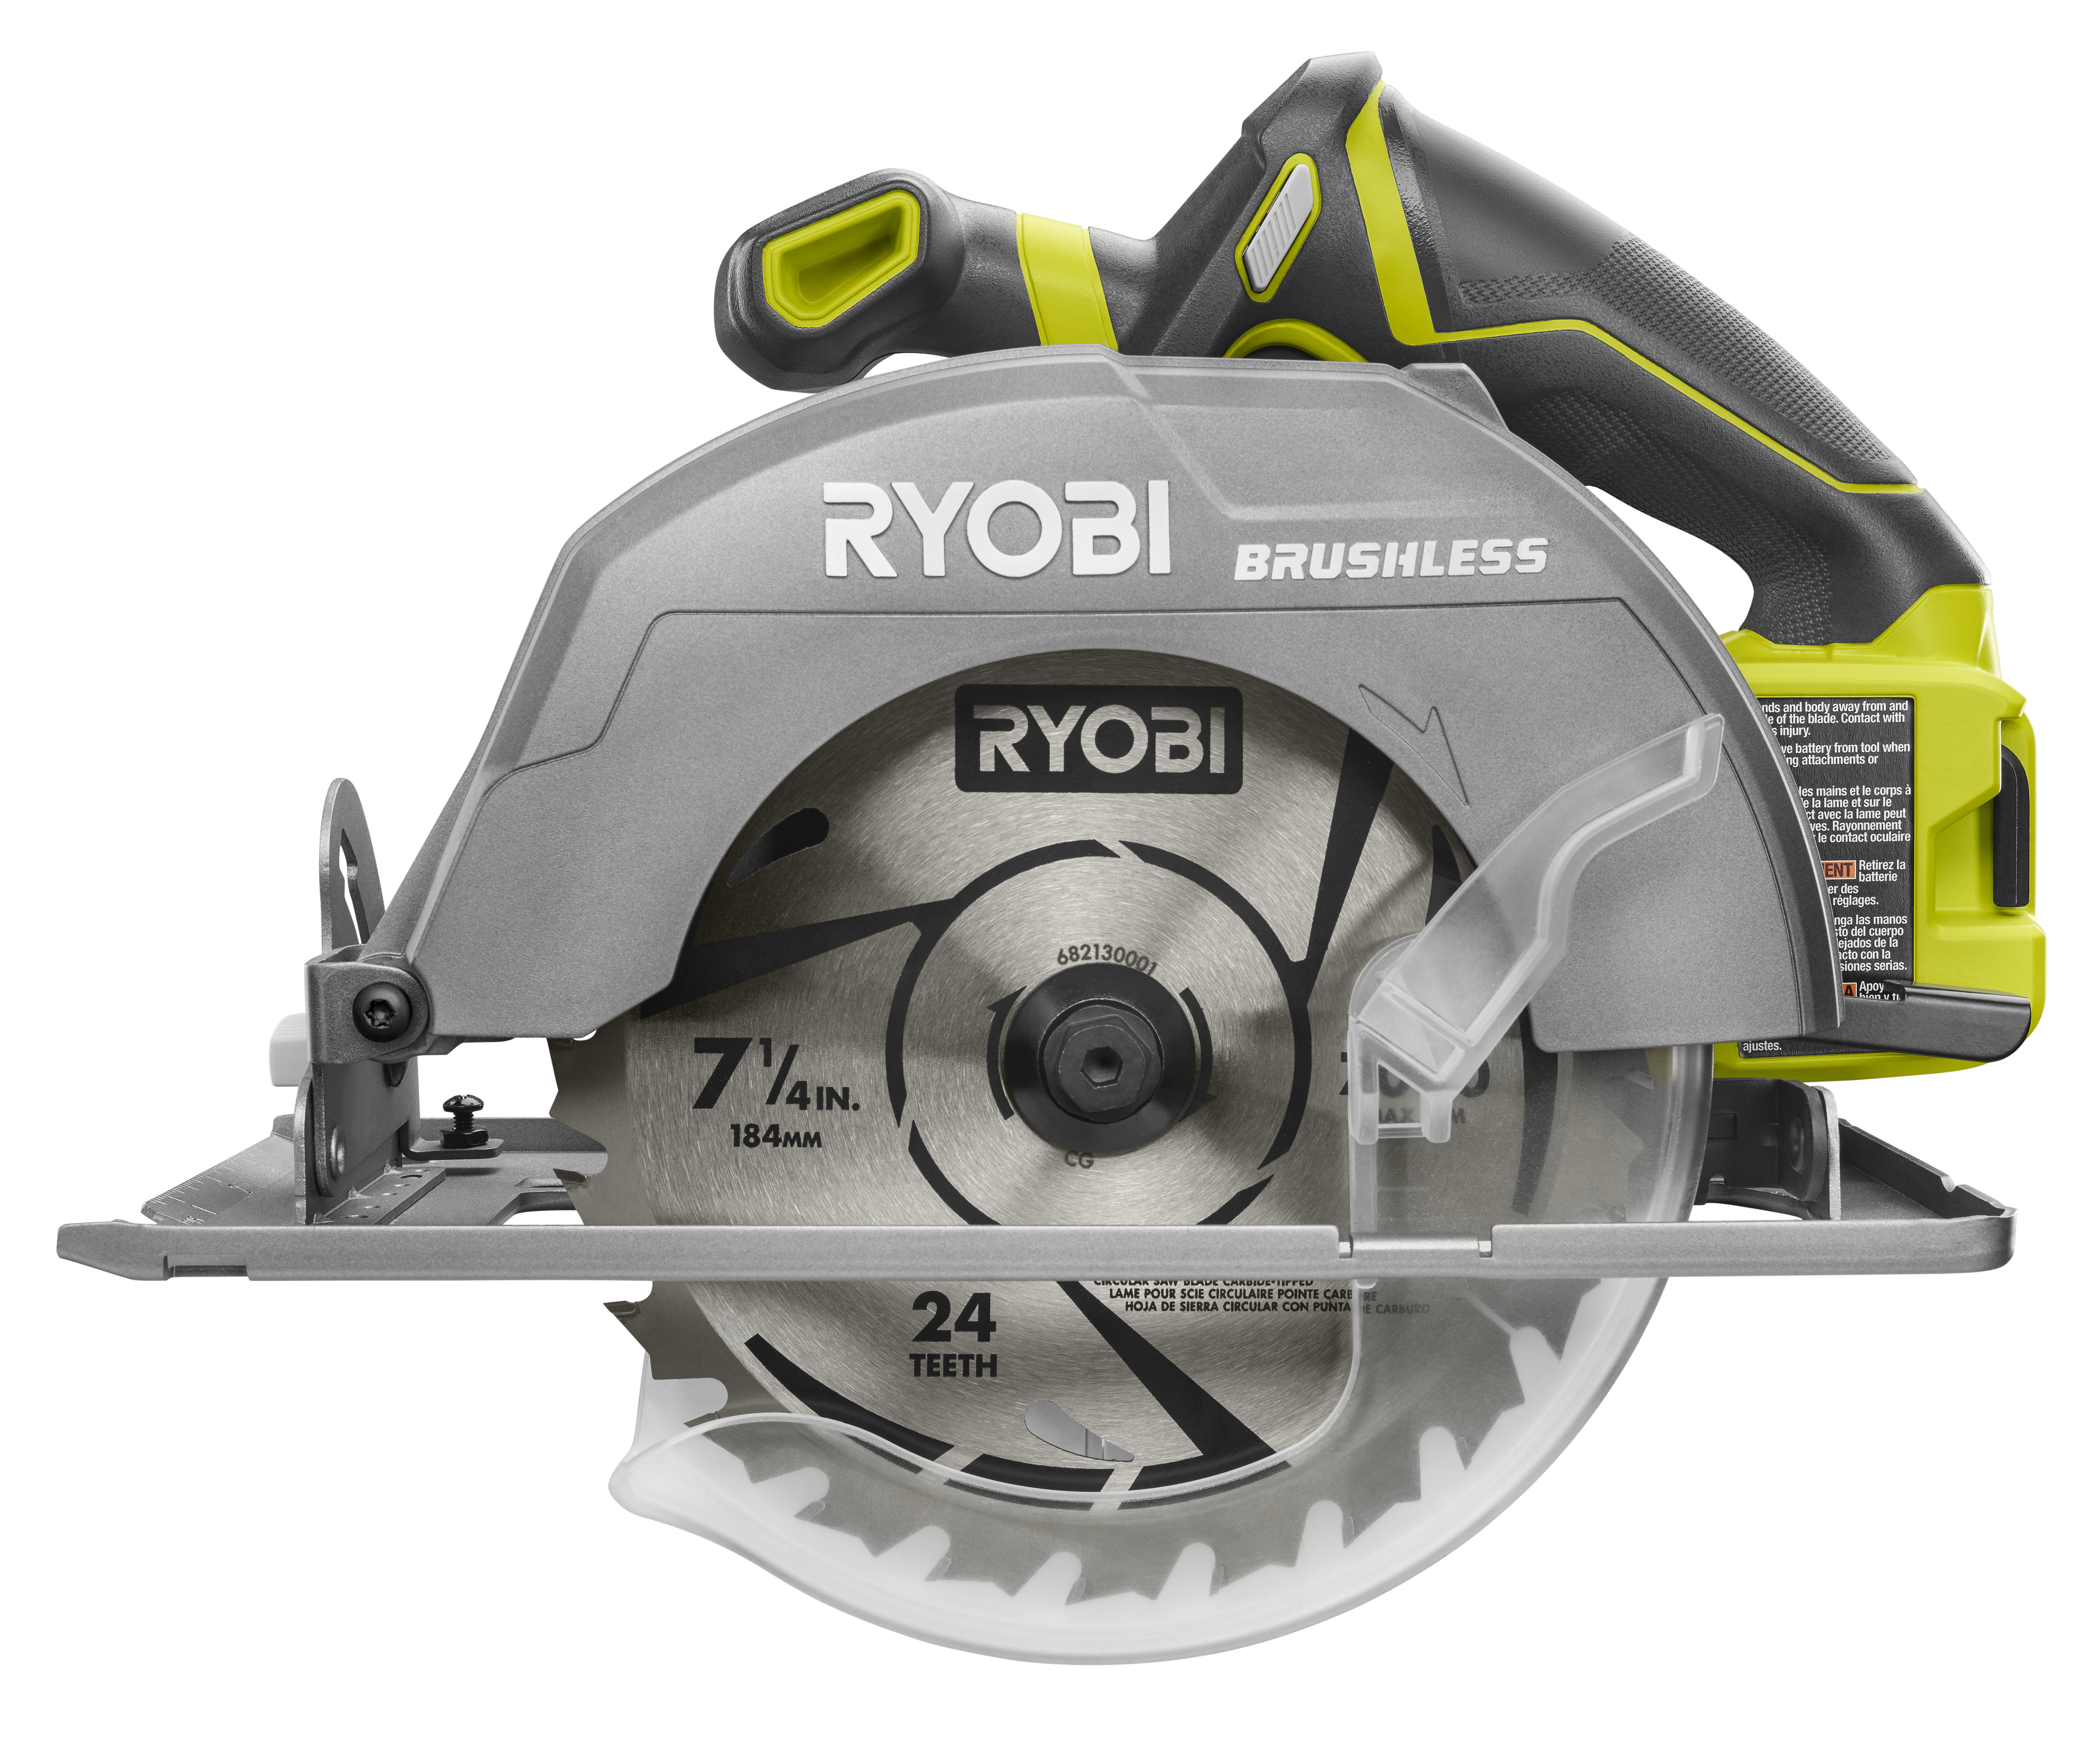 7 1/4 Circular Saw - RYOBI Tools